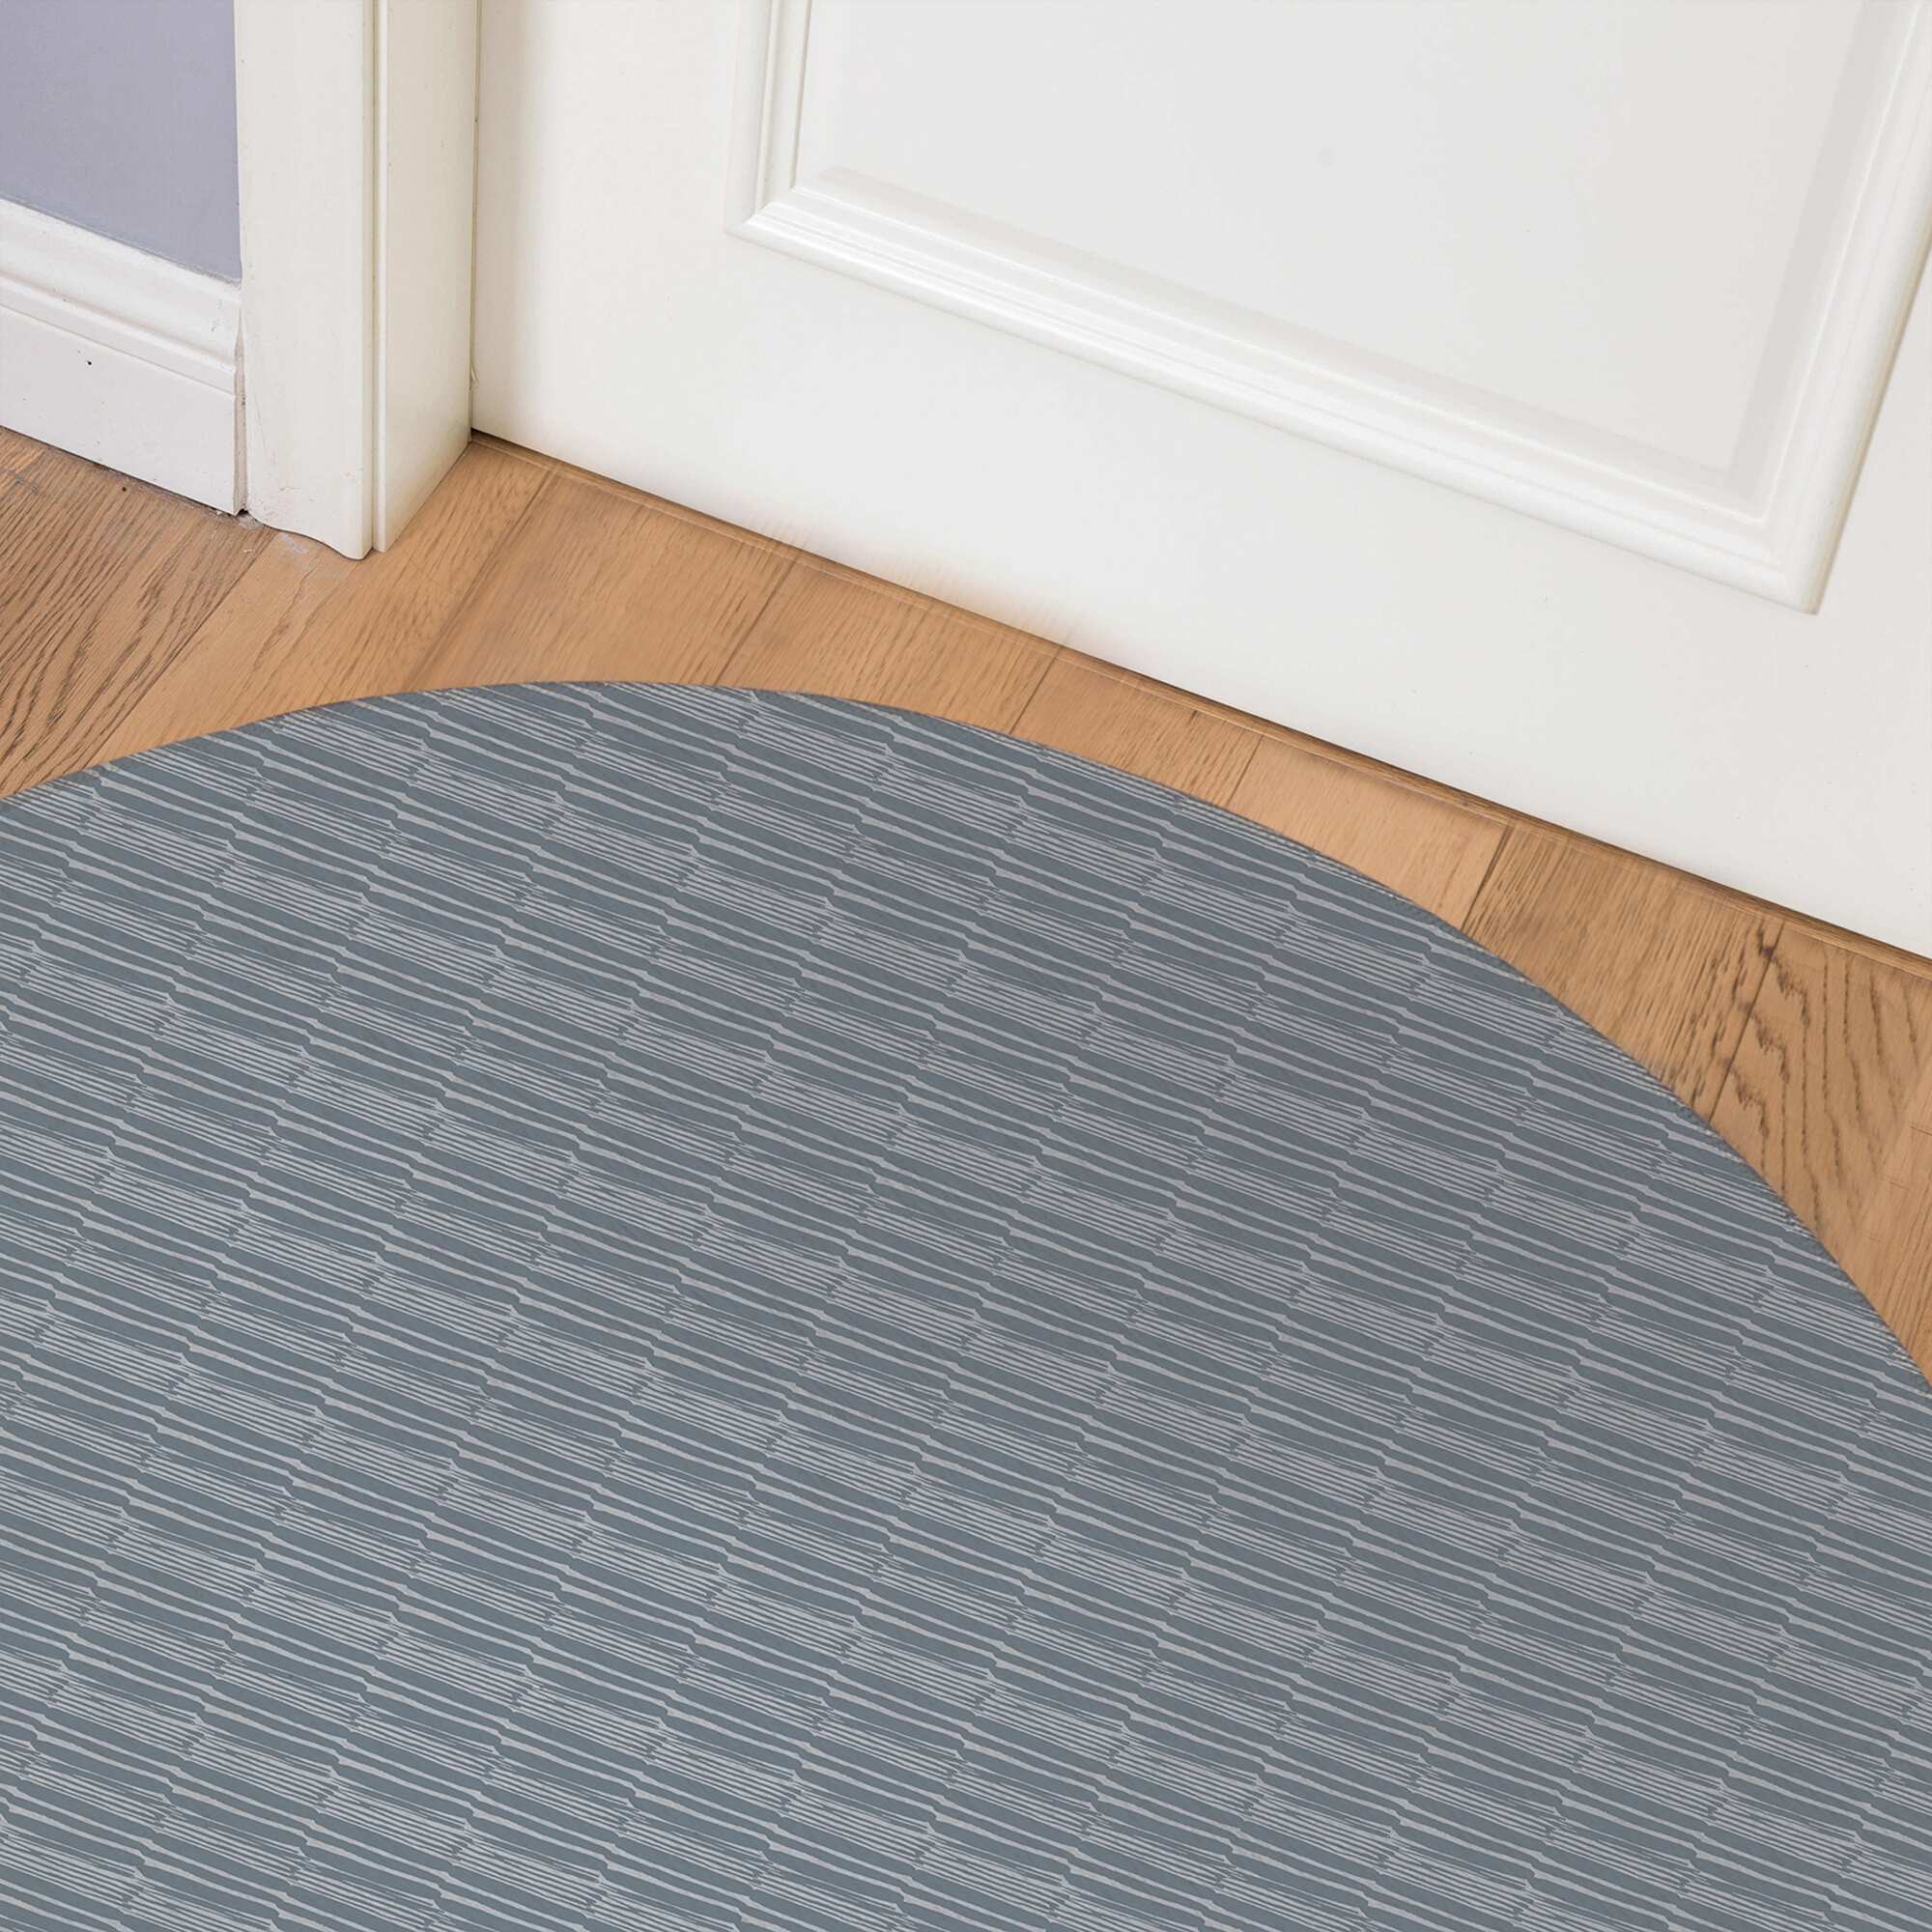 CORONA BLUE AND GREY Indoor Floor Mat By Kavka Designs